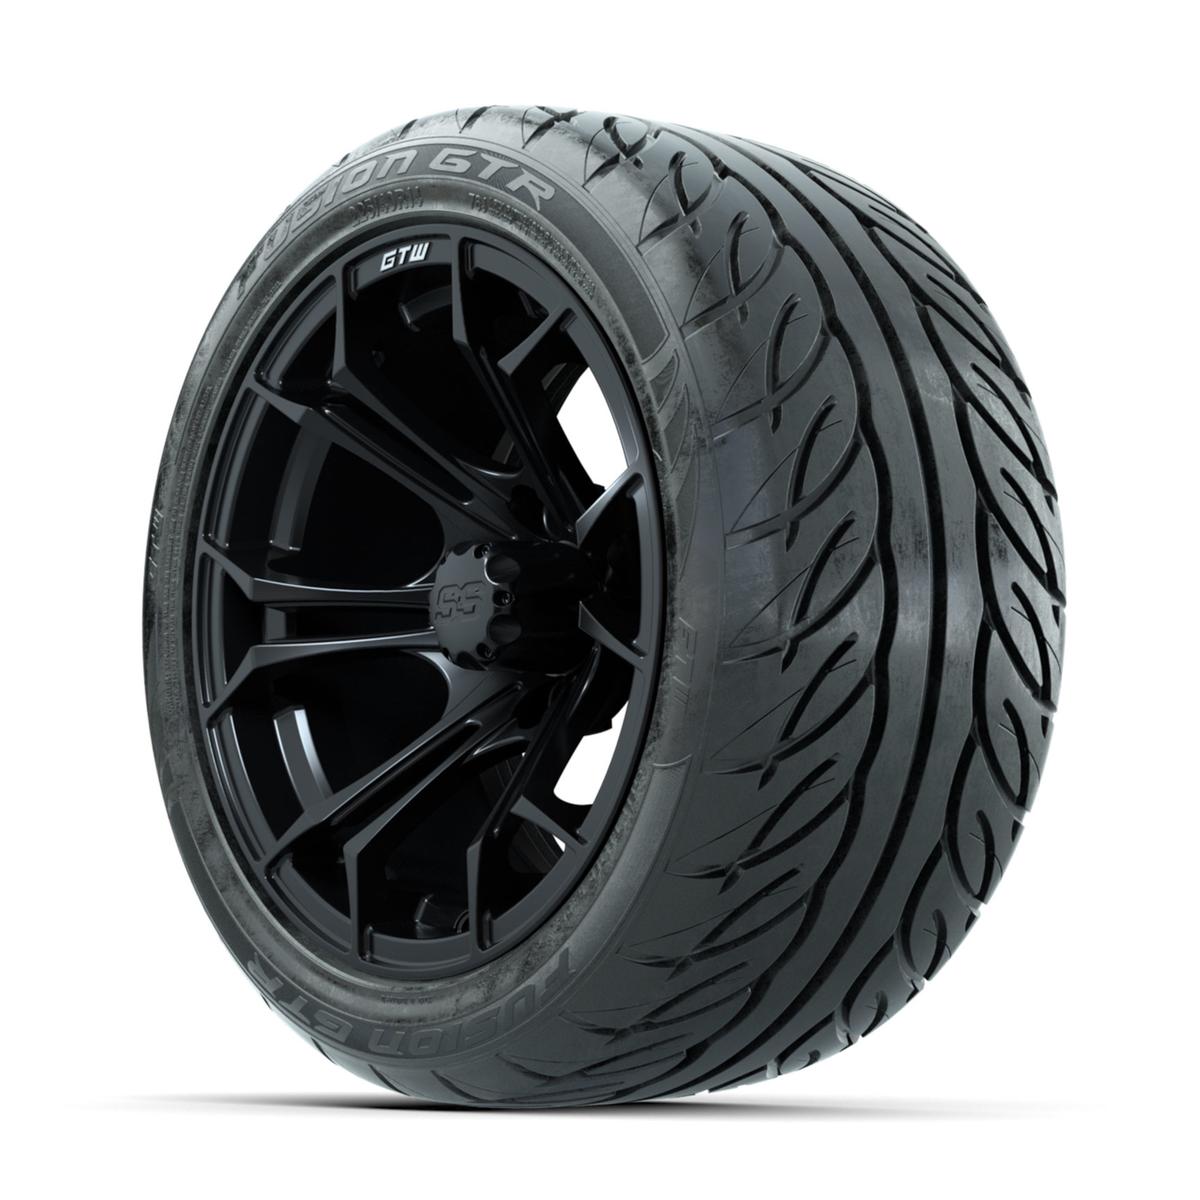 GTW Spyder Matte Black 14 in Wheels with 225/40-R14 Fusion GTR Street Tires – Full Set